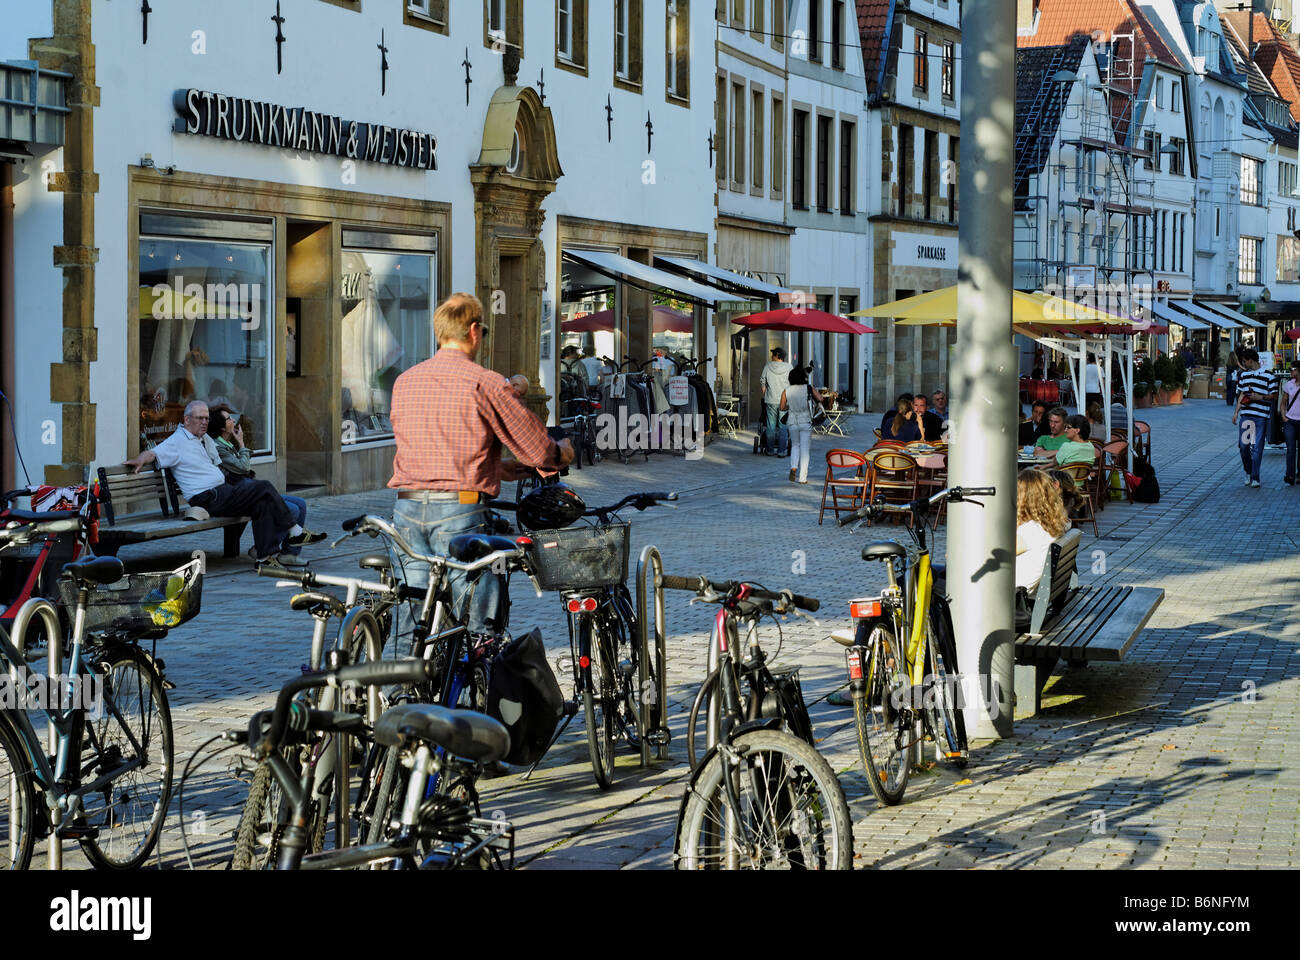 Street scene in the old town Bielefeld Germany Stock Photo